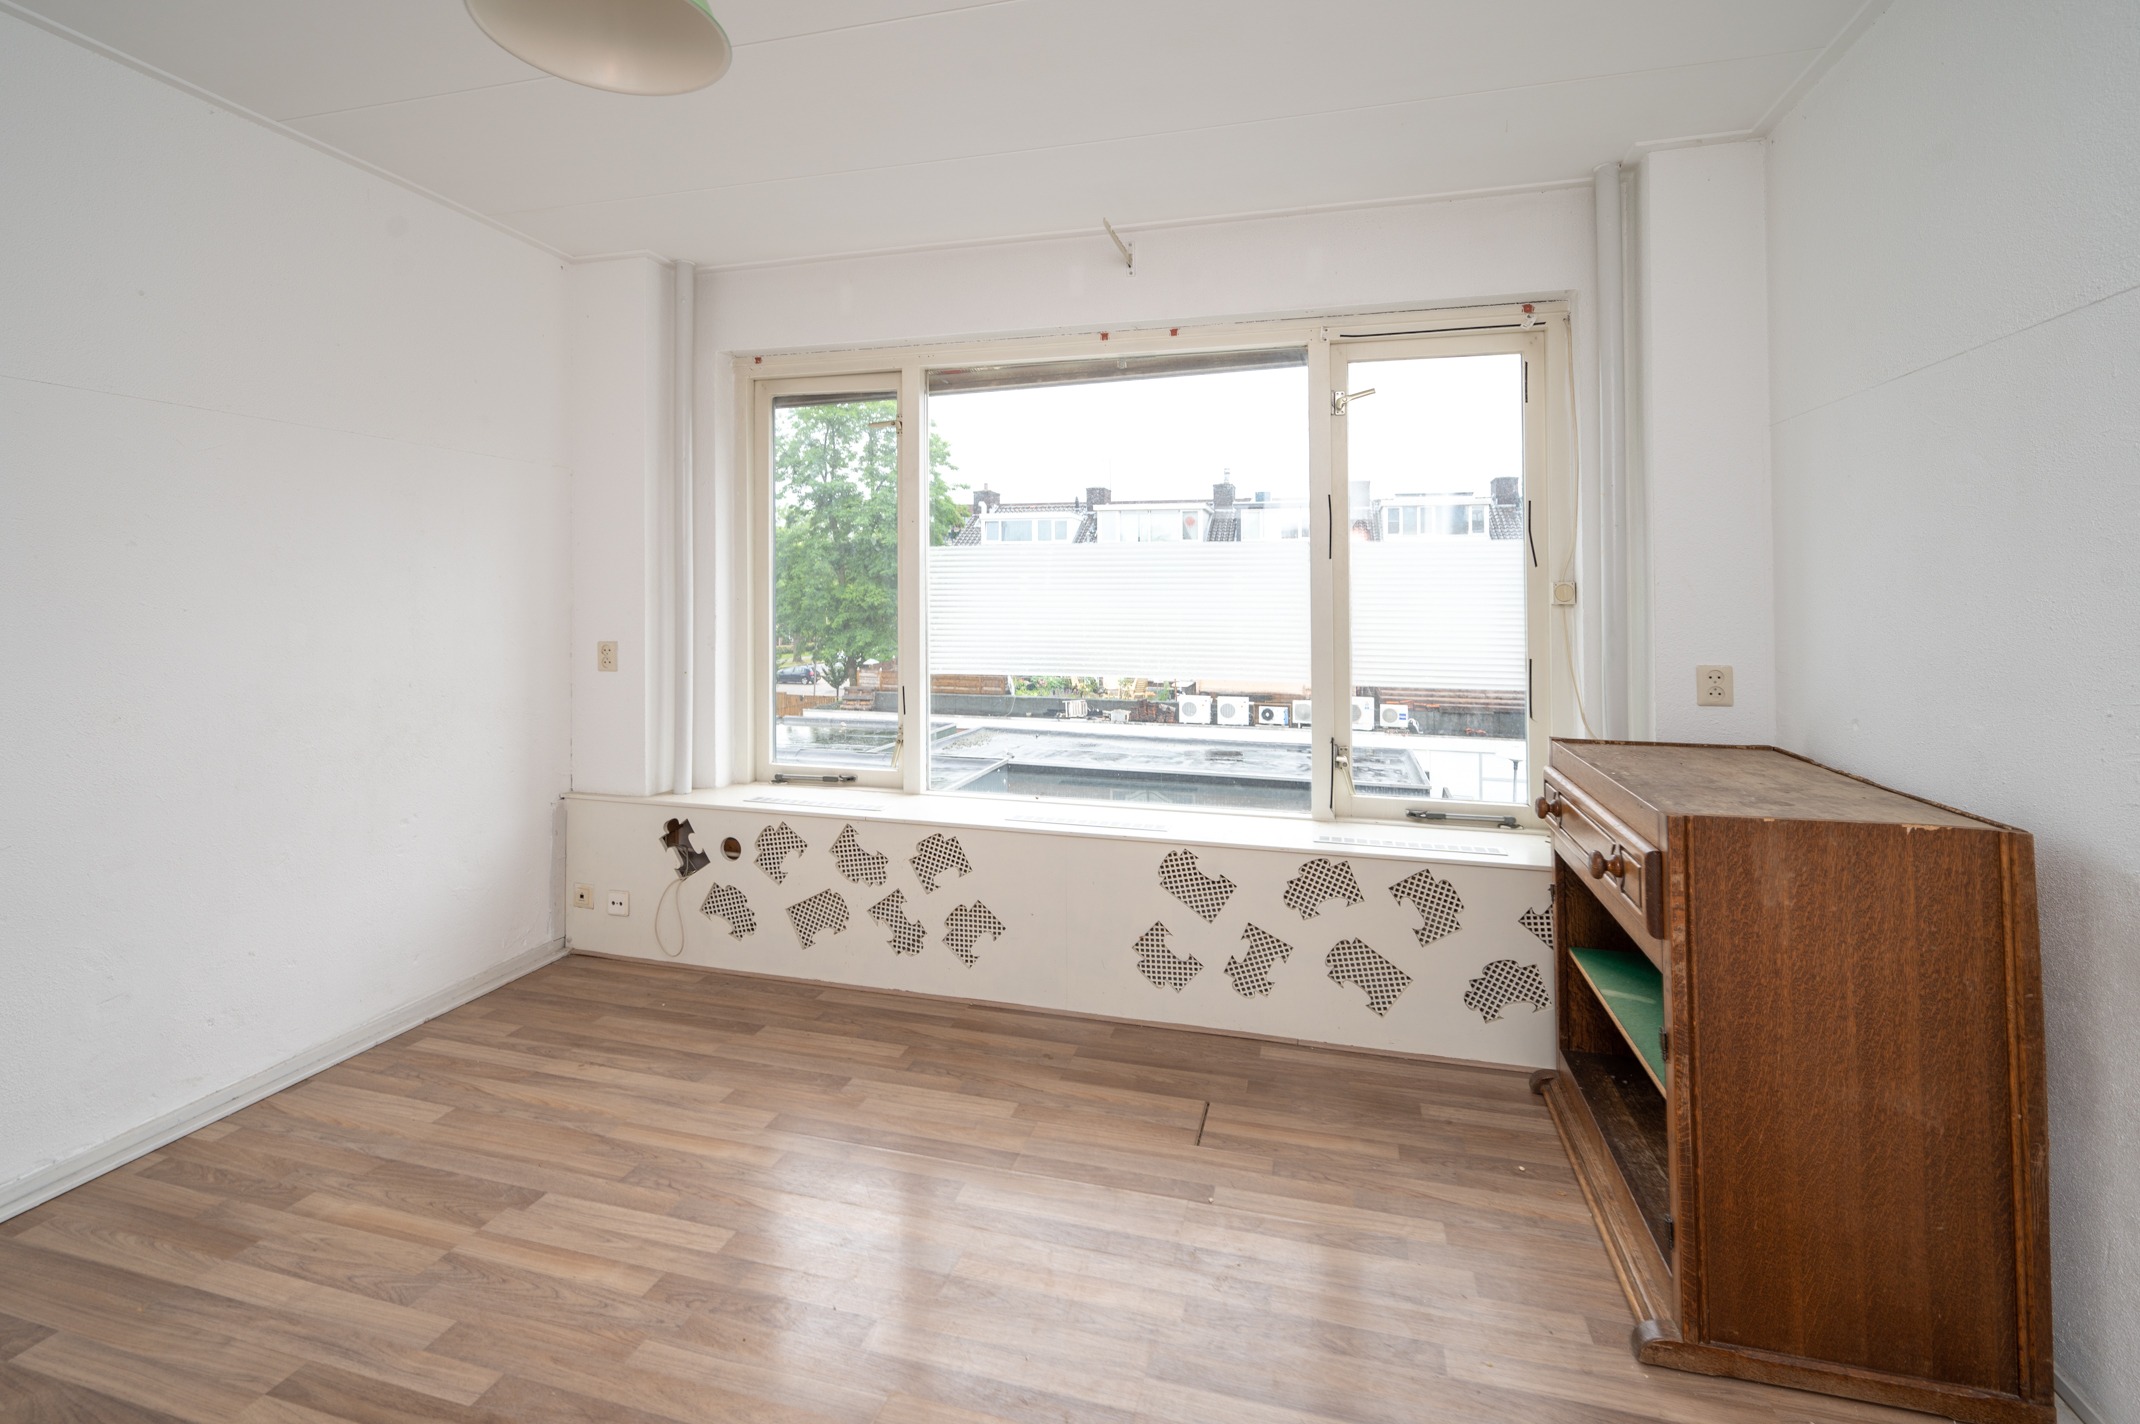 Woning / appartement - Utrecht - Wallesteinlaan 55